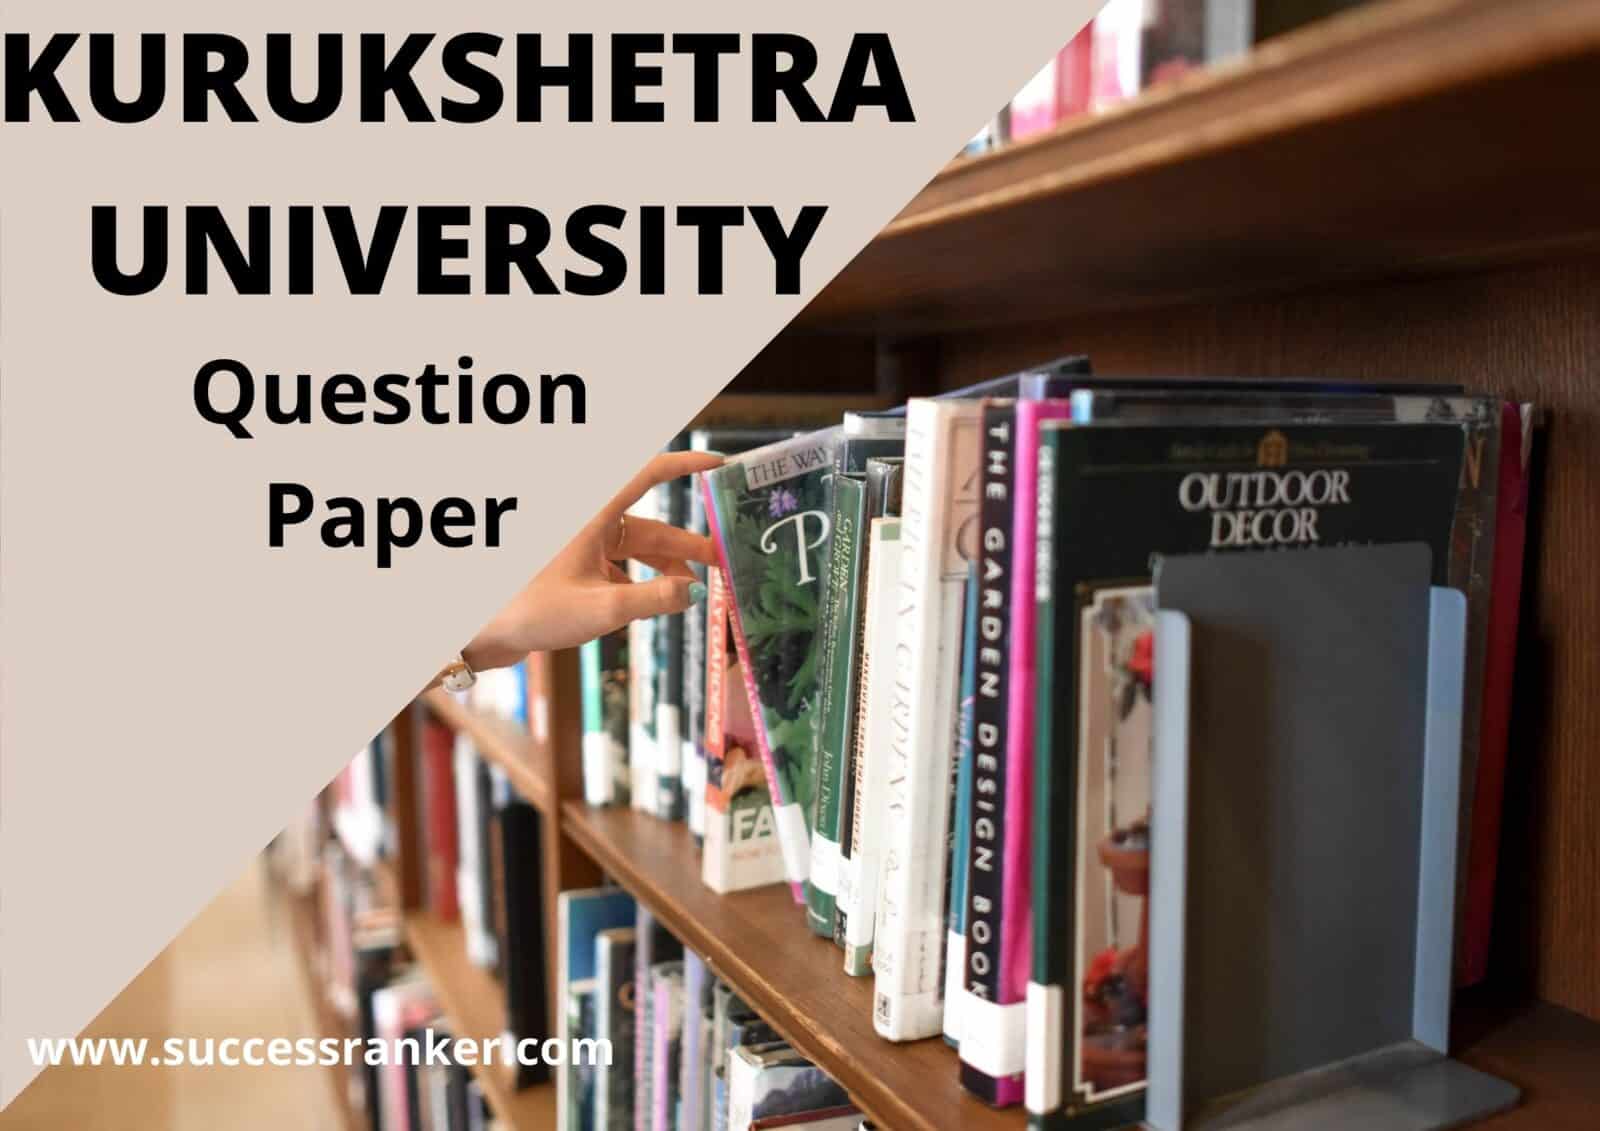 KURUKSHETRA UNIVERSITY Question Paper